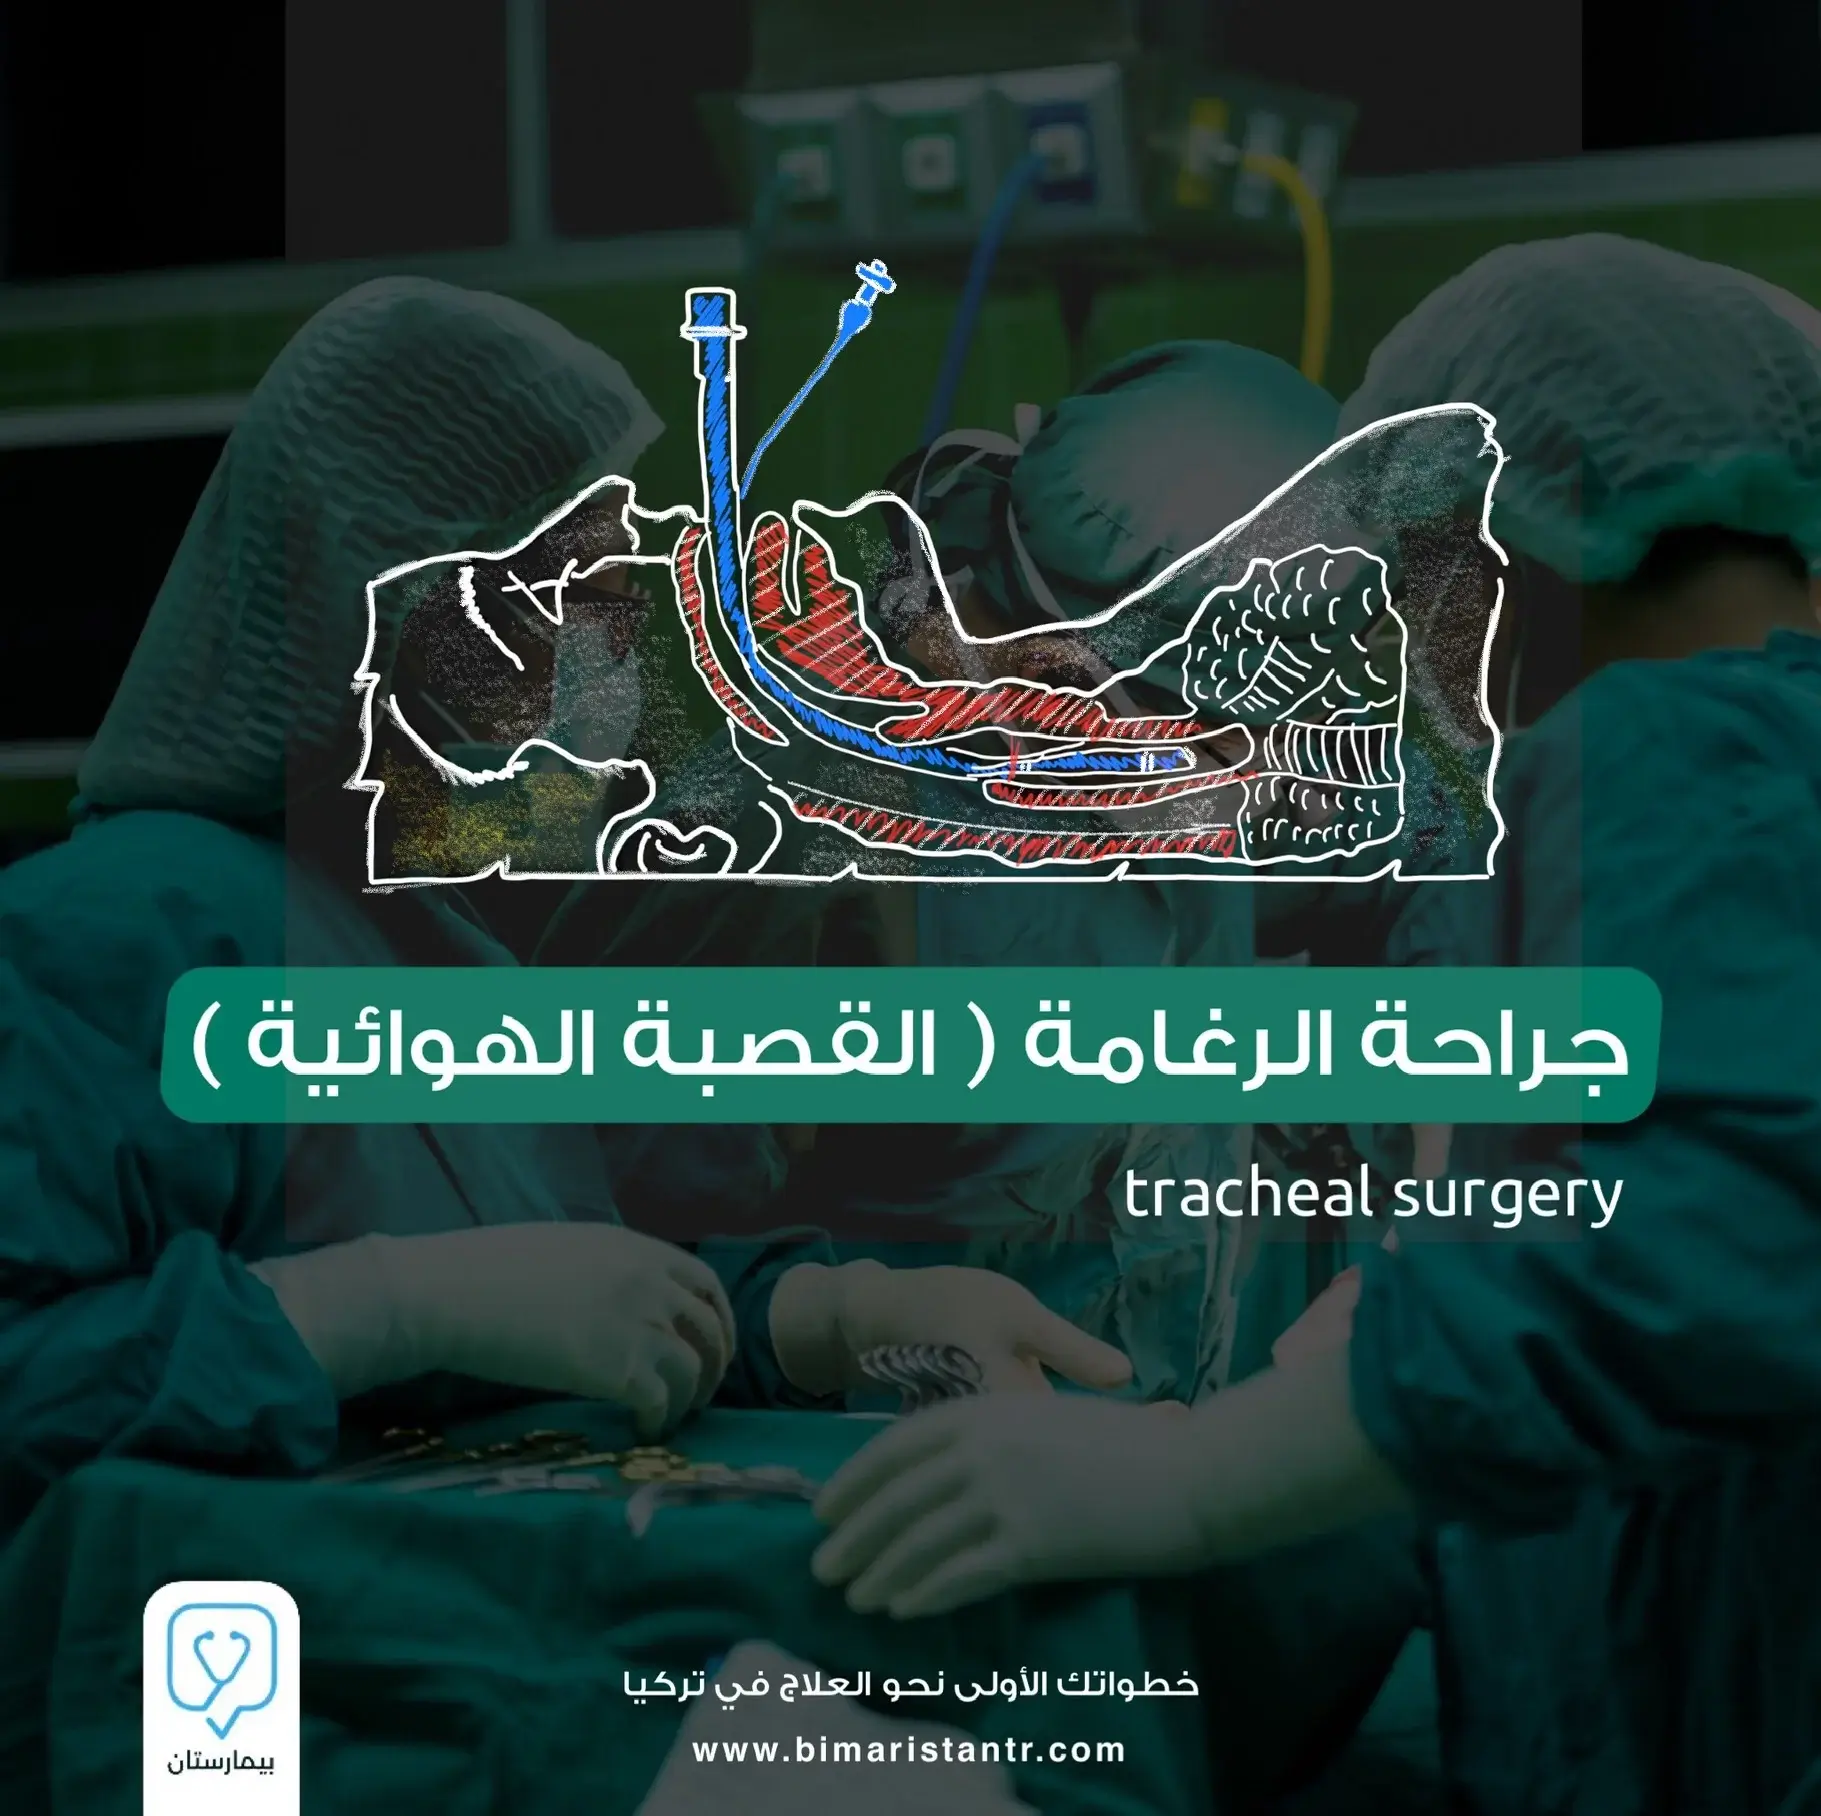 Tracheal surgery